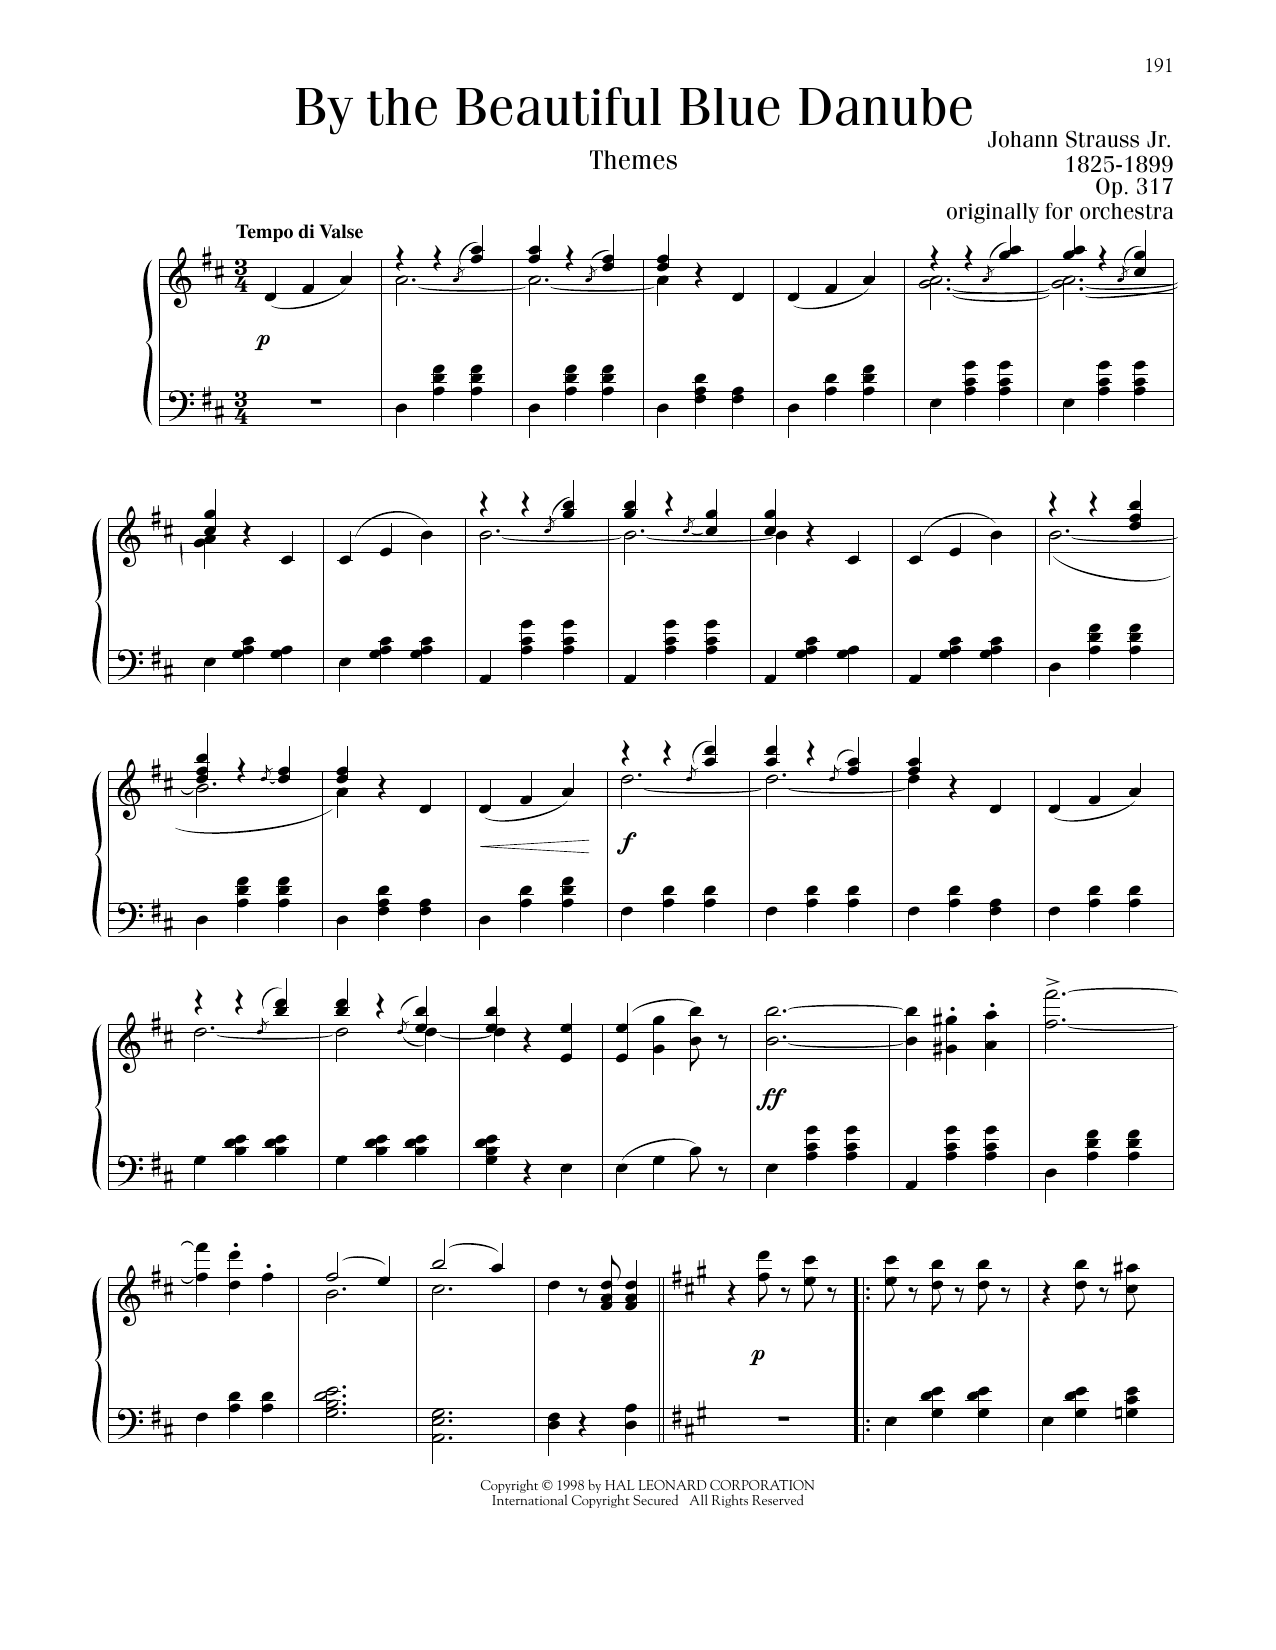 Johann Strauss, Jr. By The Beautiful Blue Danube sheet music notes printable PDF score